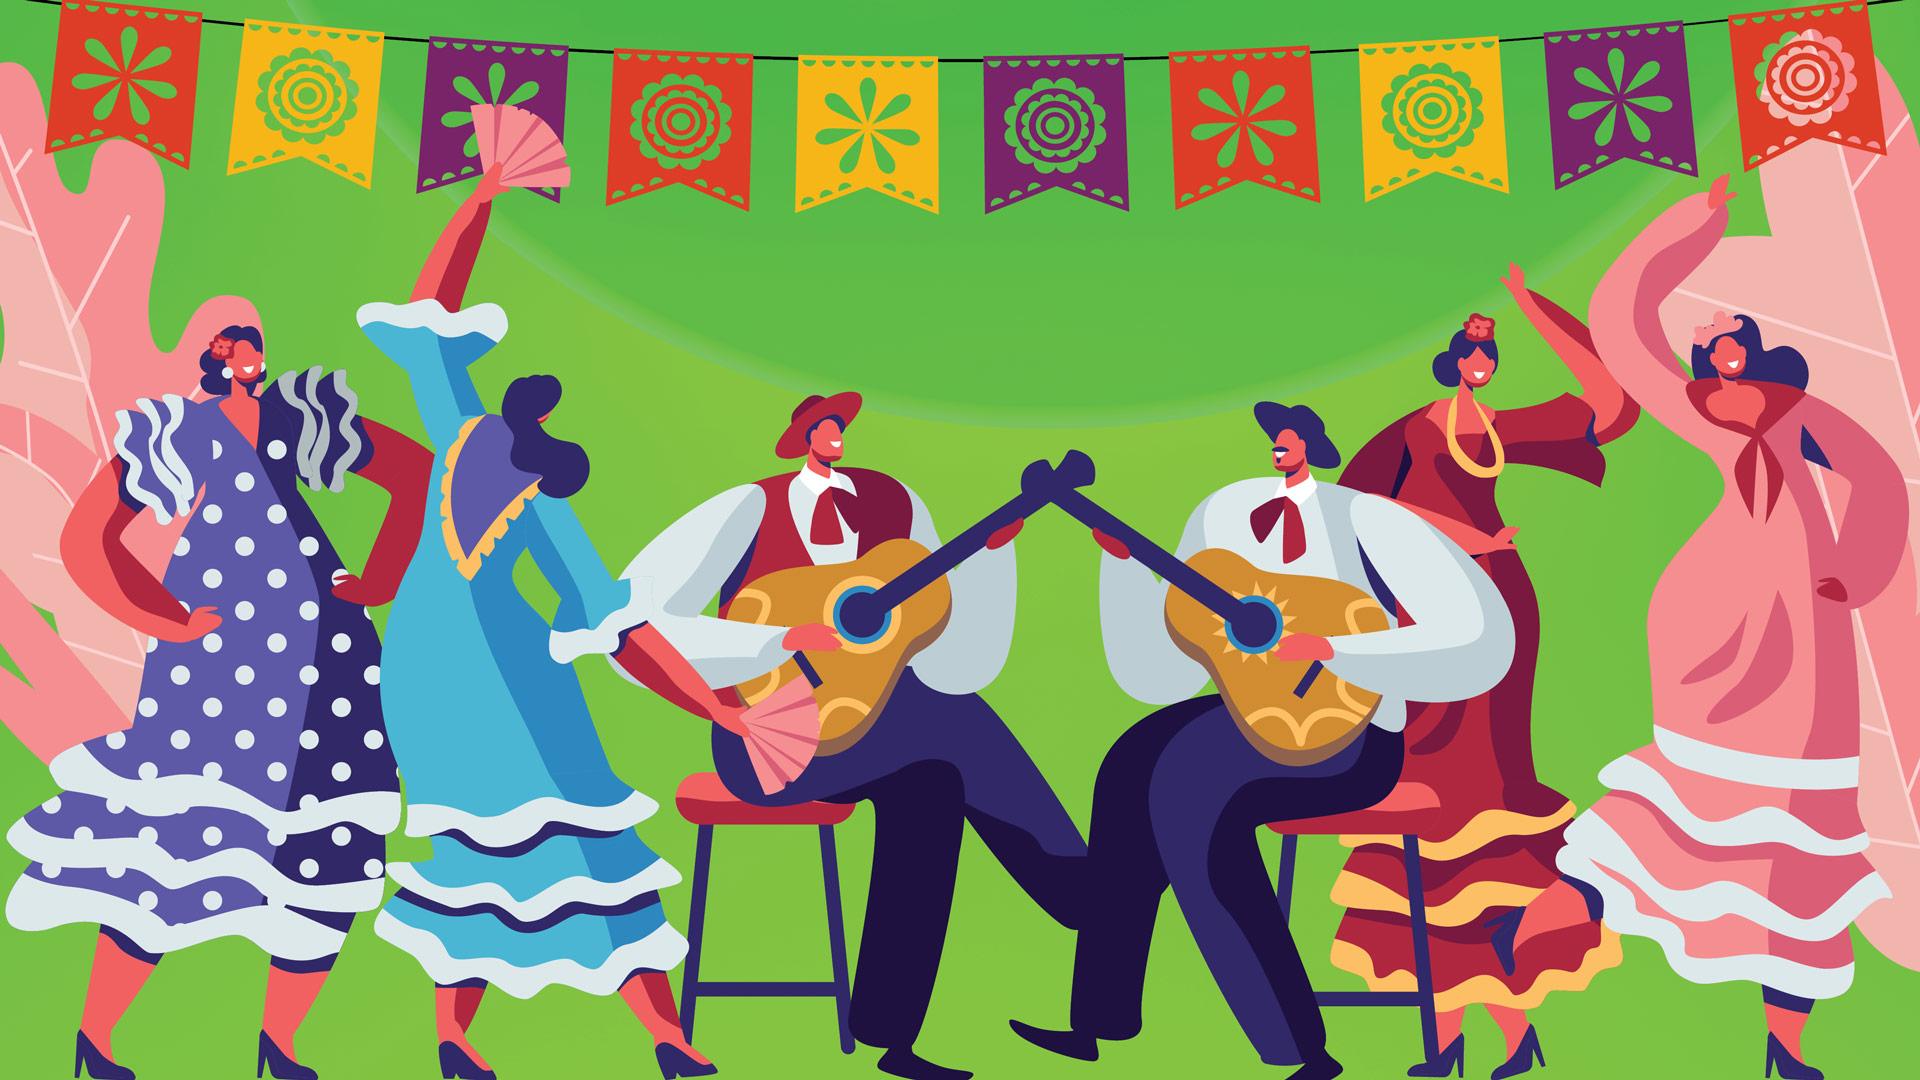 Background image for Hispanic Heritage Fiesta 